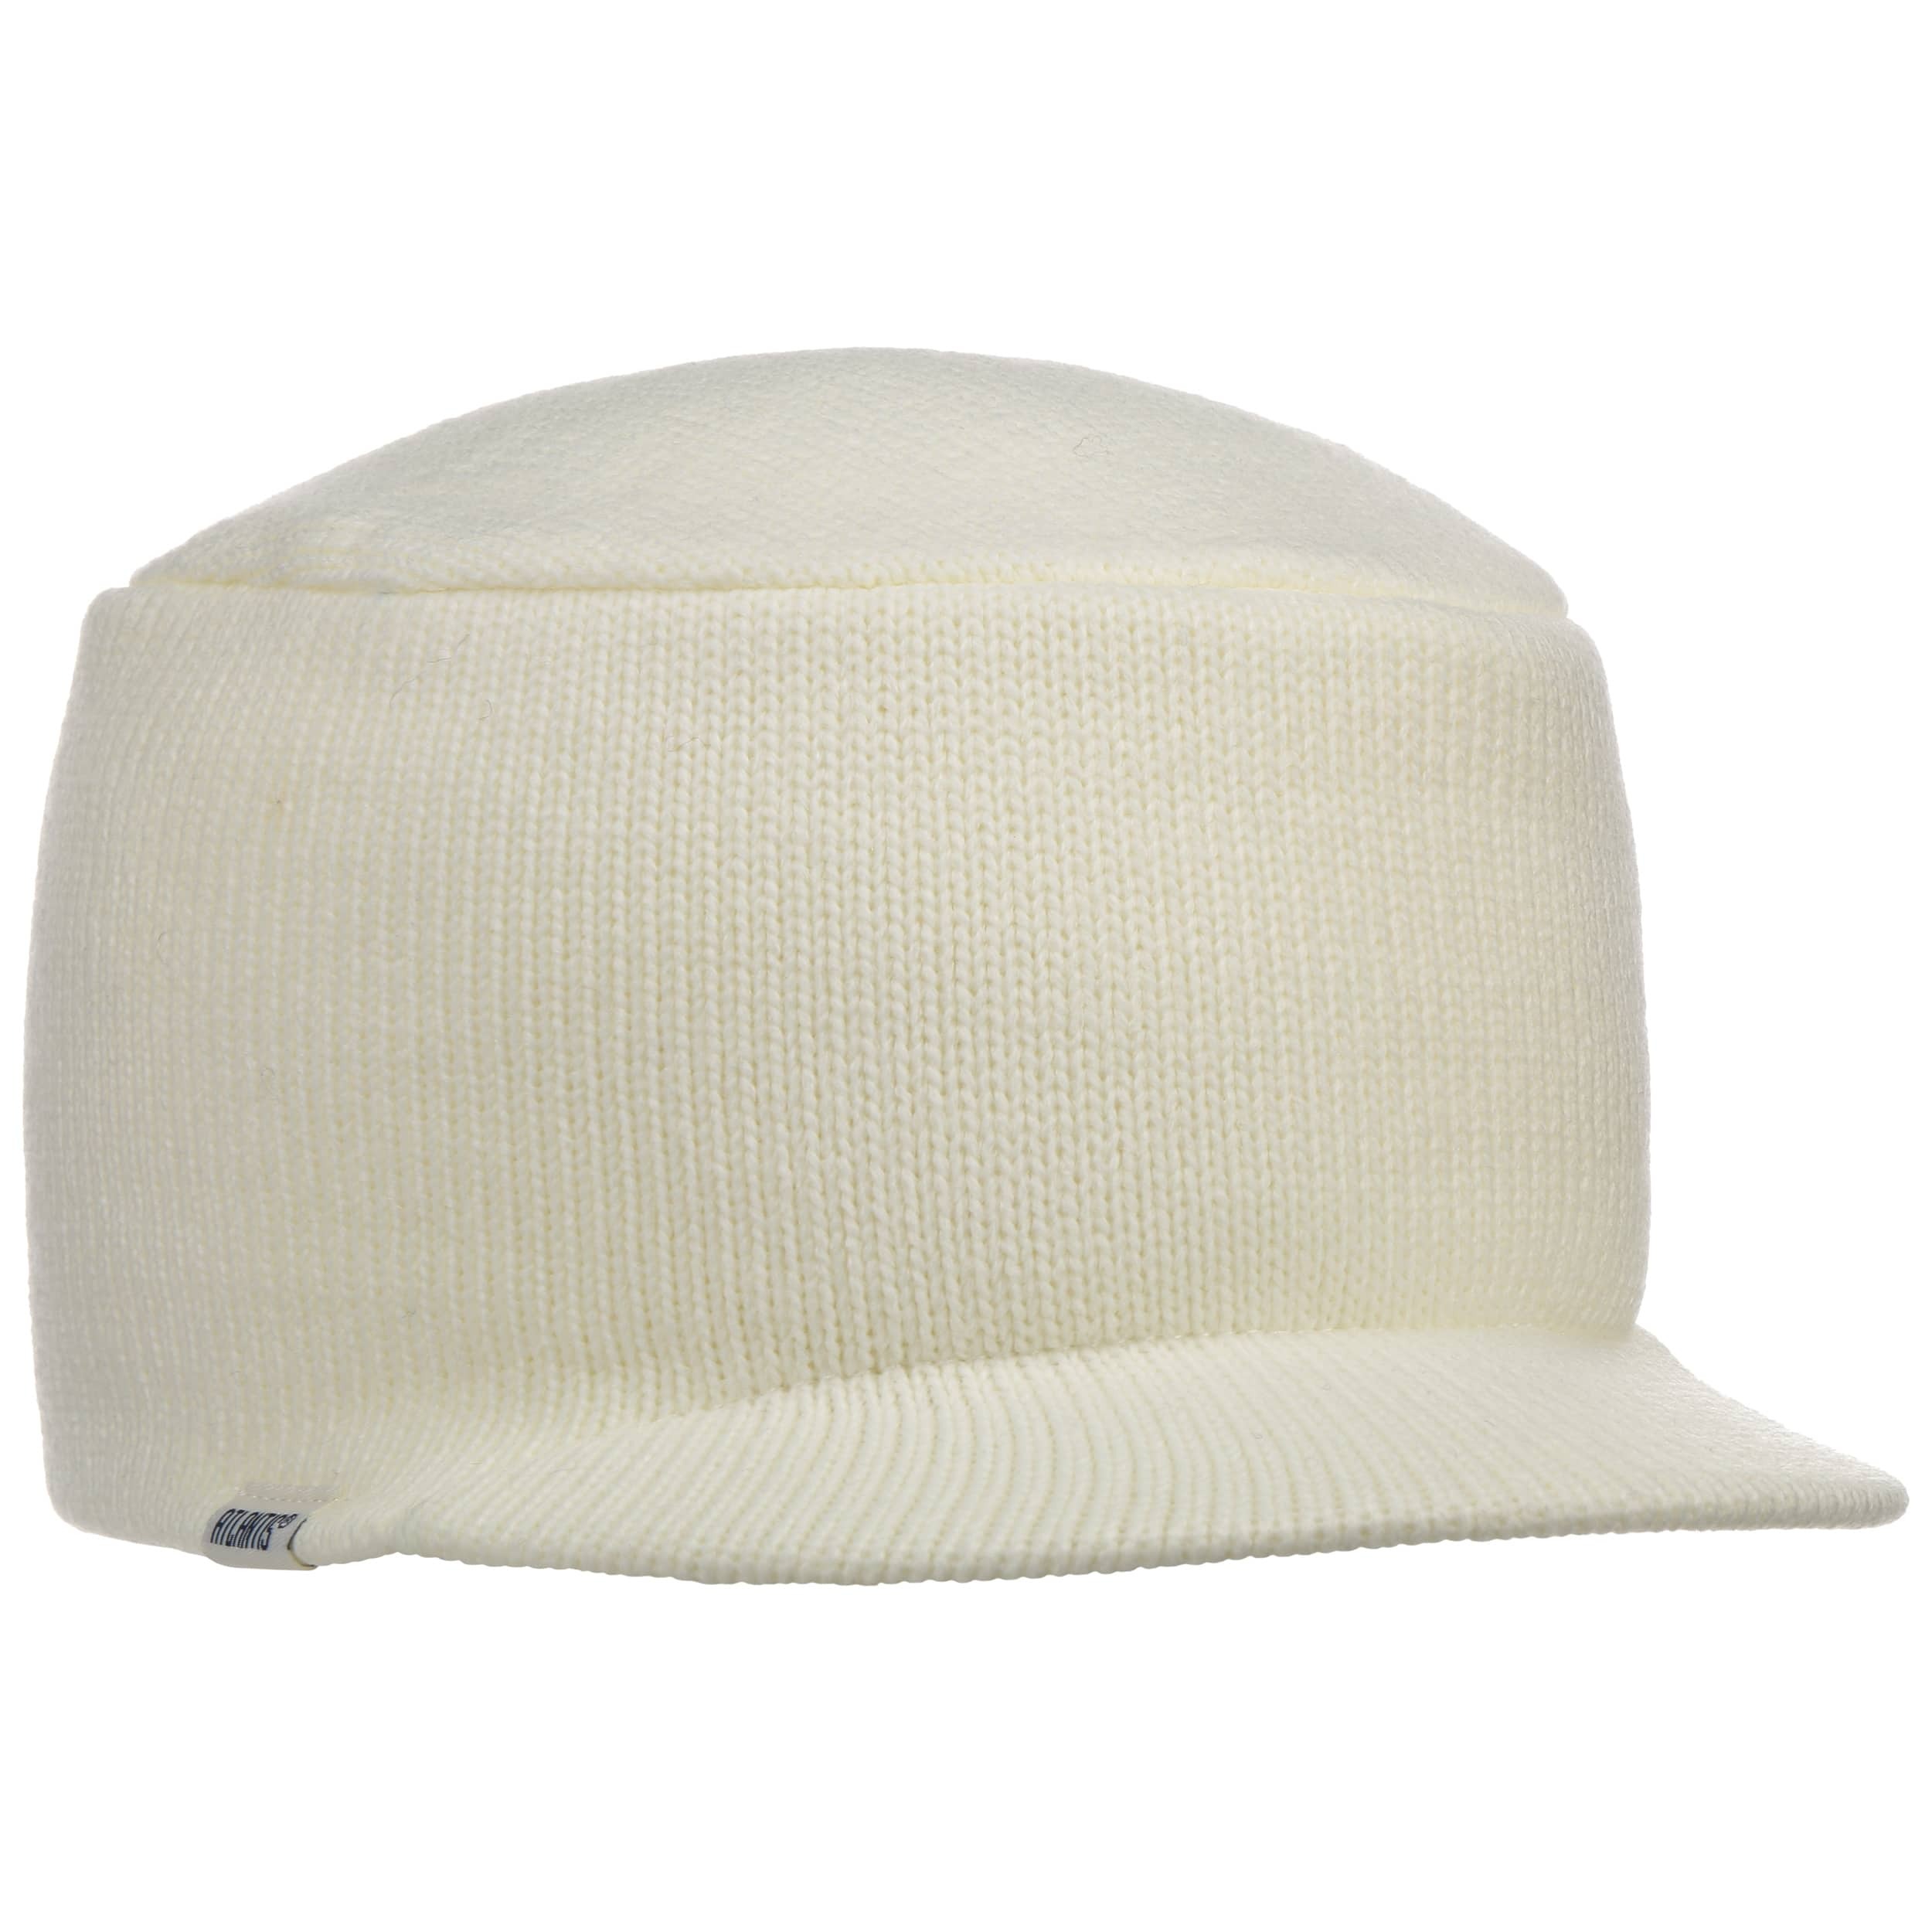 Army Cap Soft, GBP 13,95 --> Hats, caps & beanies shop online ...